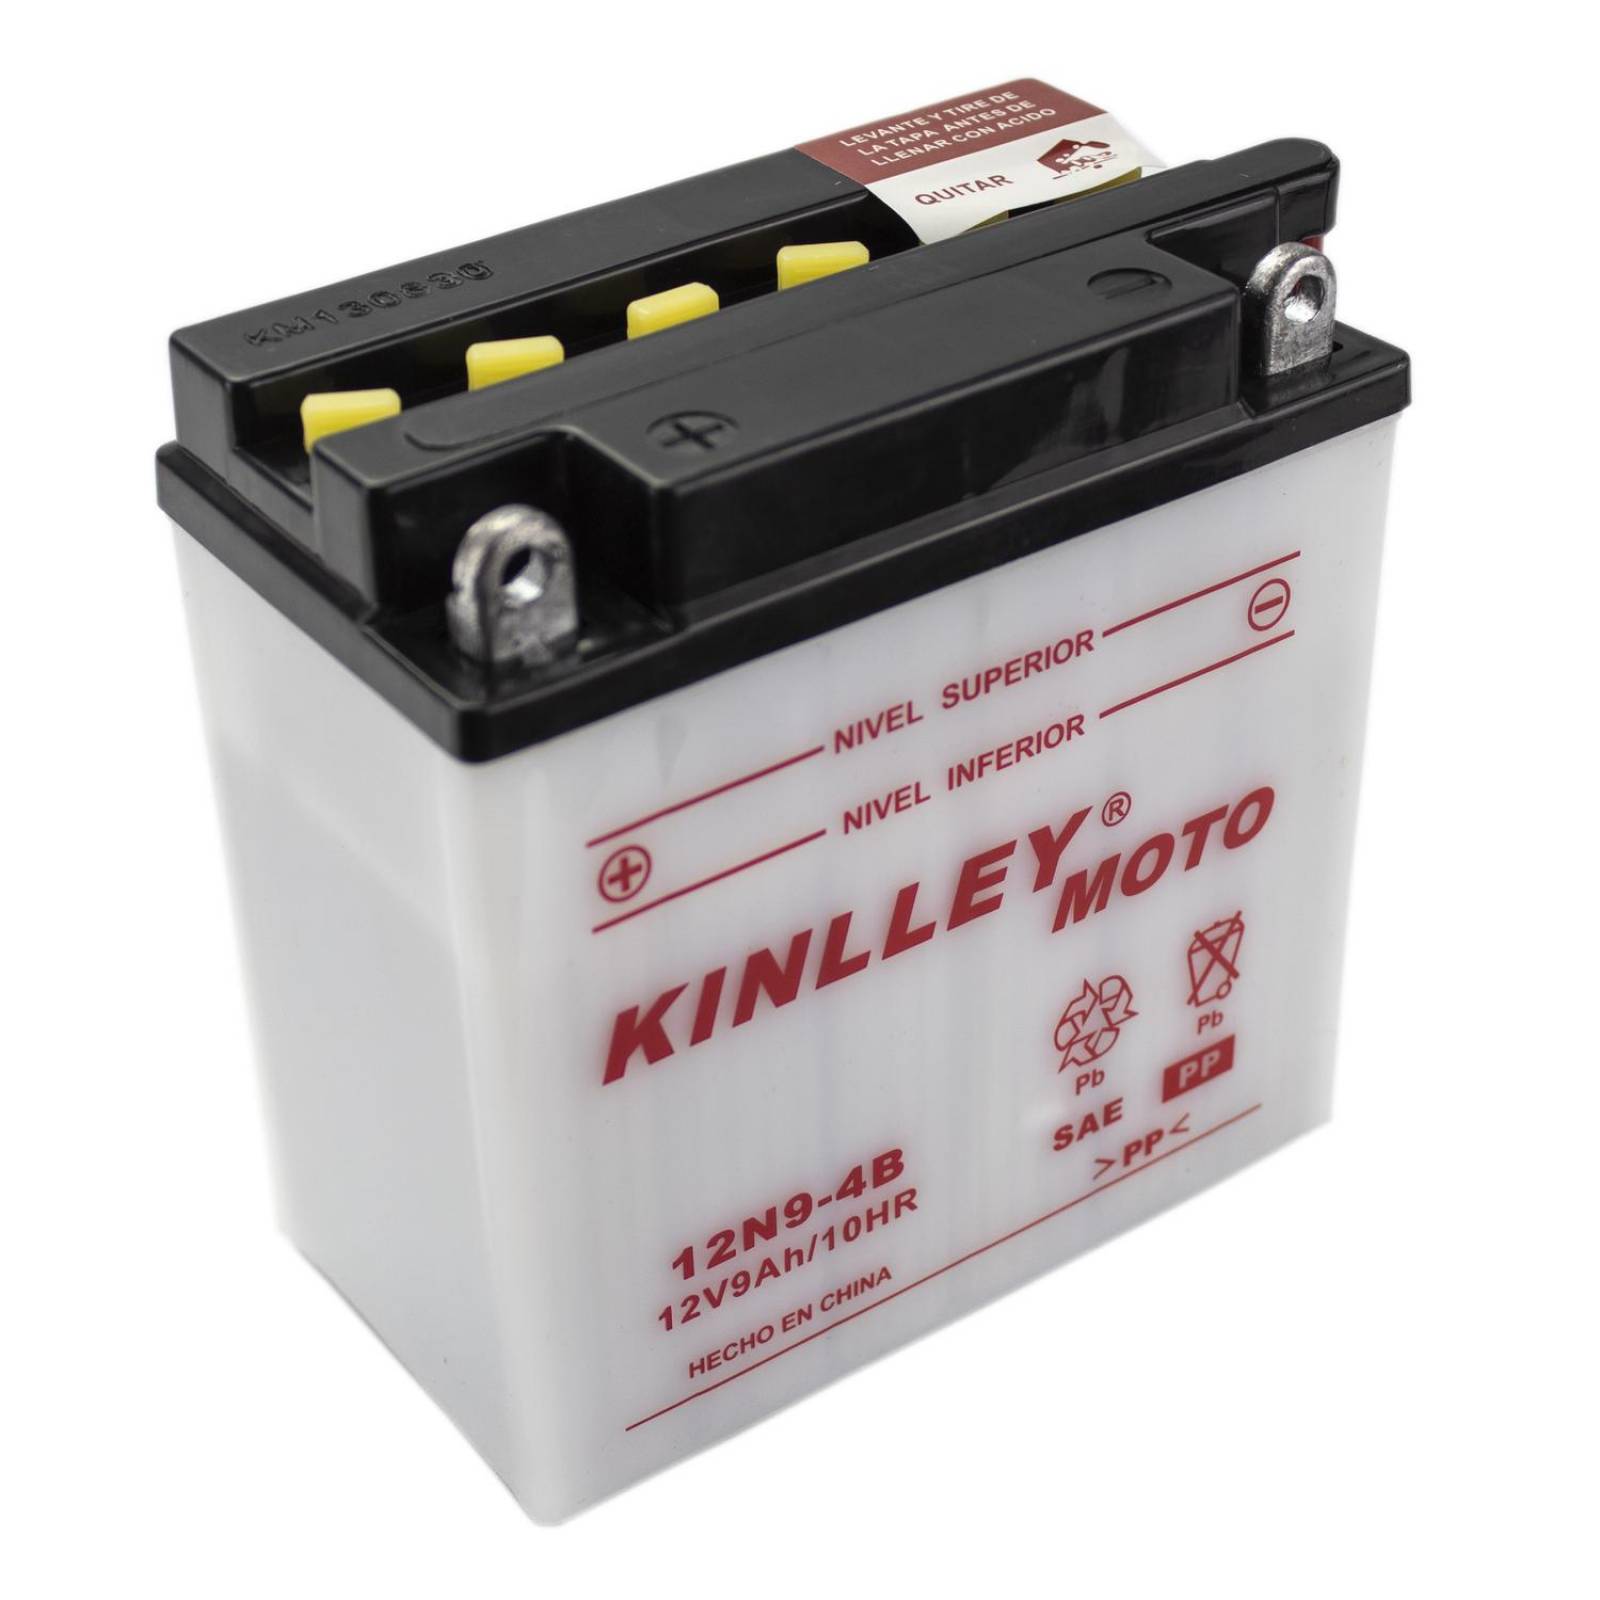 Bateria para moto YTX9-BS 12V 9Ah Kinlley